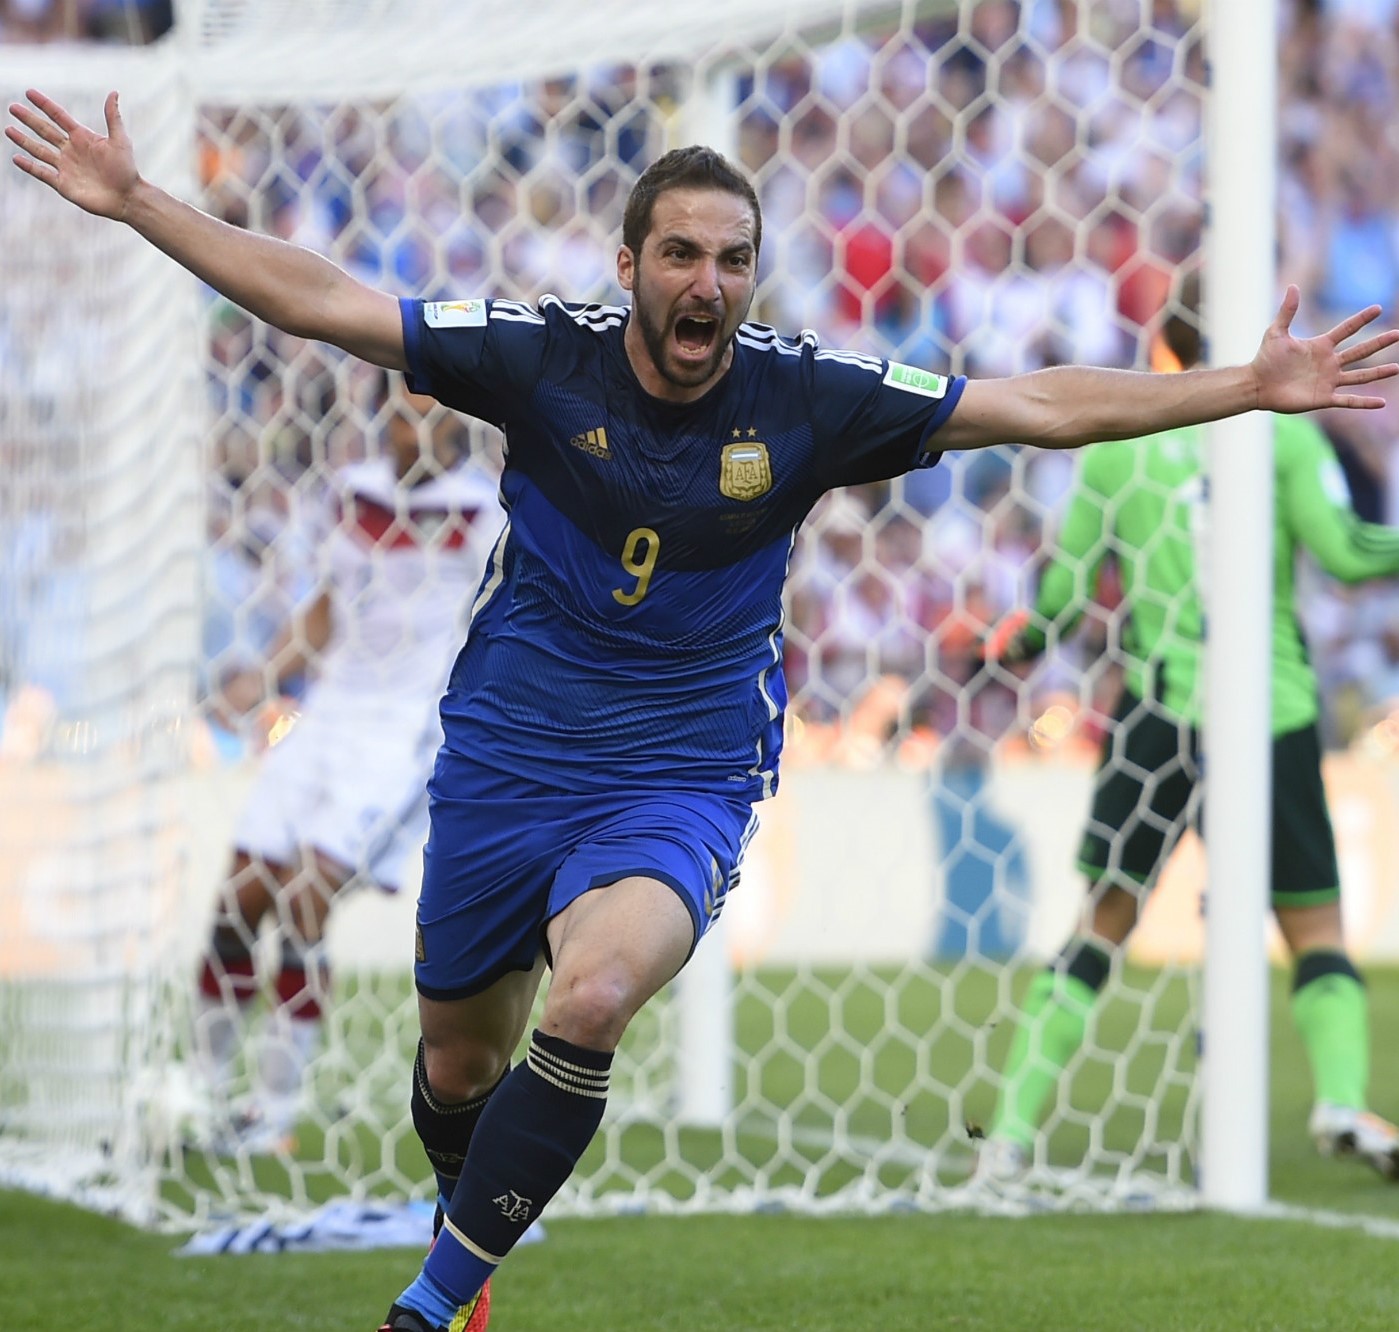 gonzalo-higuain-argentina-2014-world-cup-final-07132014_155n01vqf67h31klai5pkw95i0.jpg